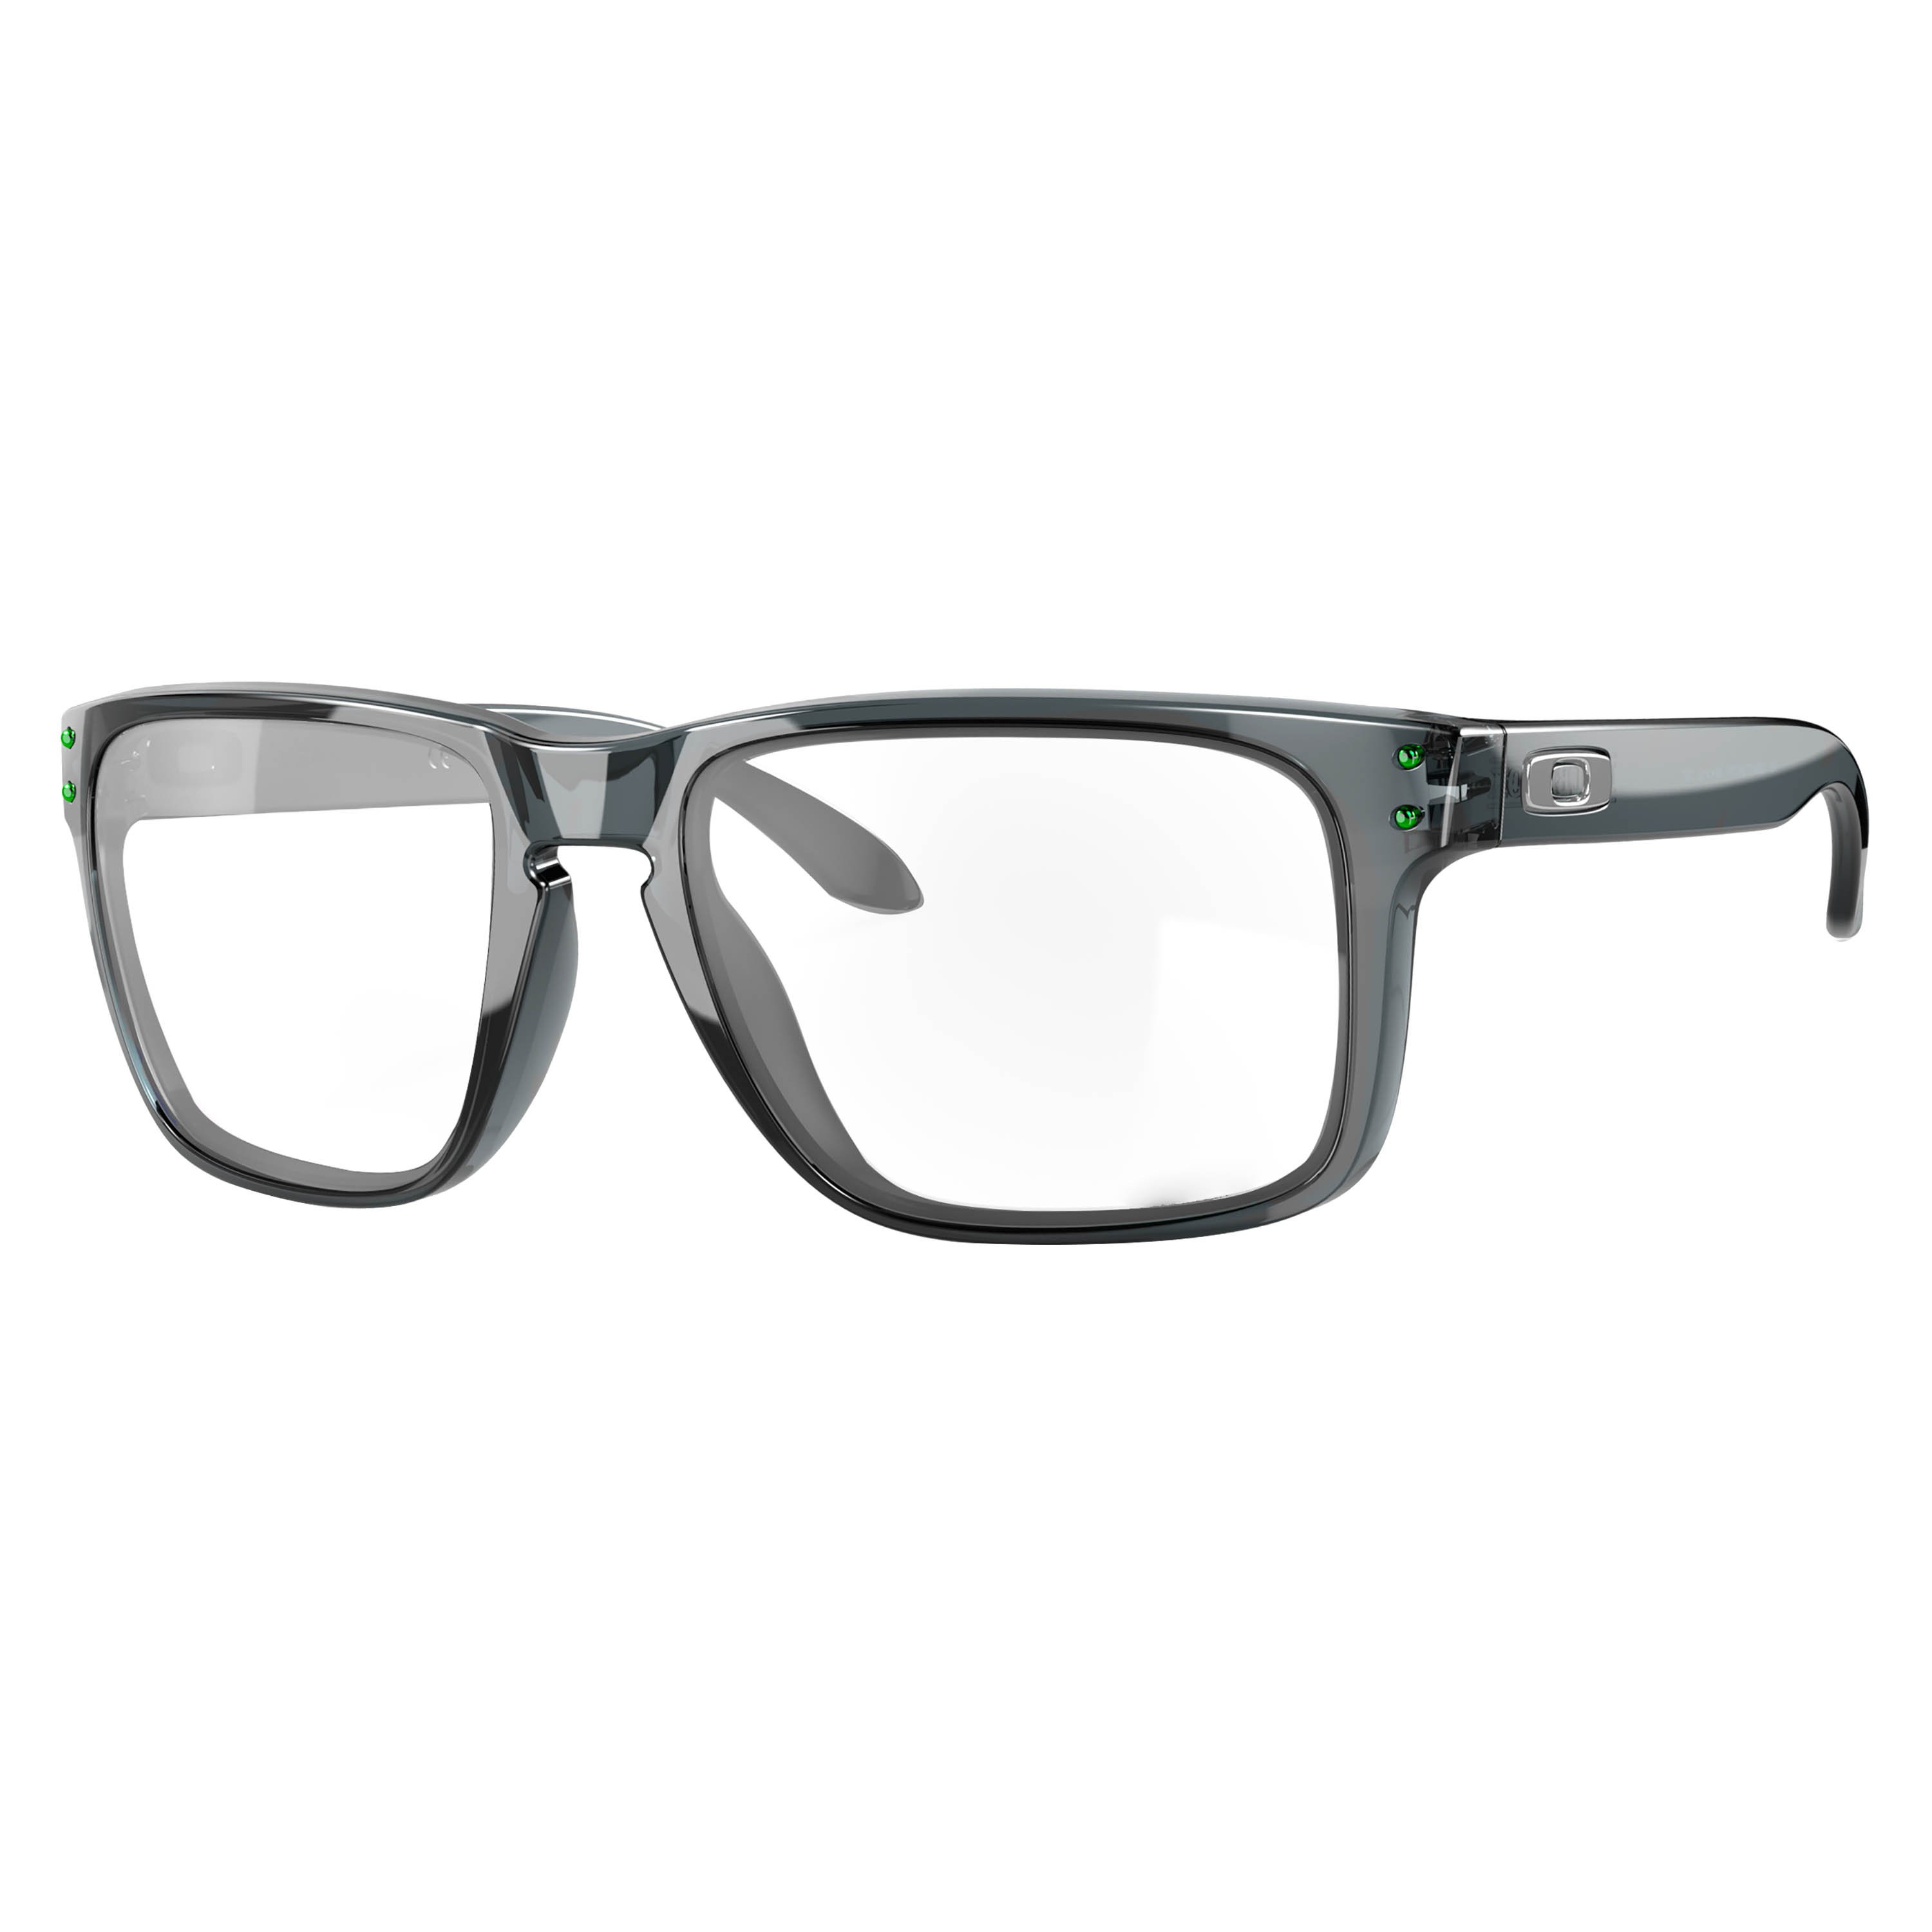 Phillips Safety Oakley Holbrook XL Radiation Glasses